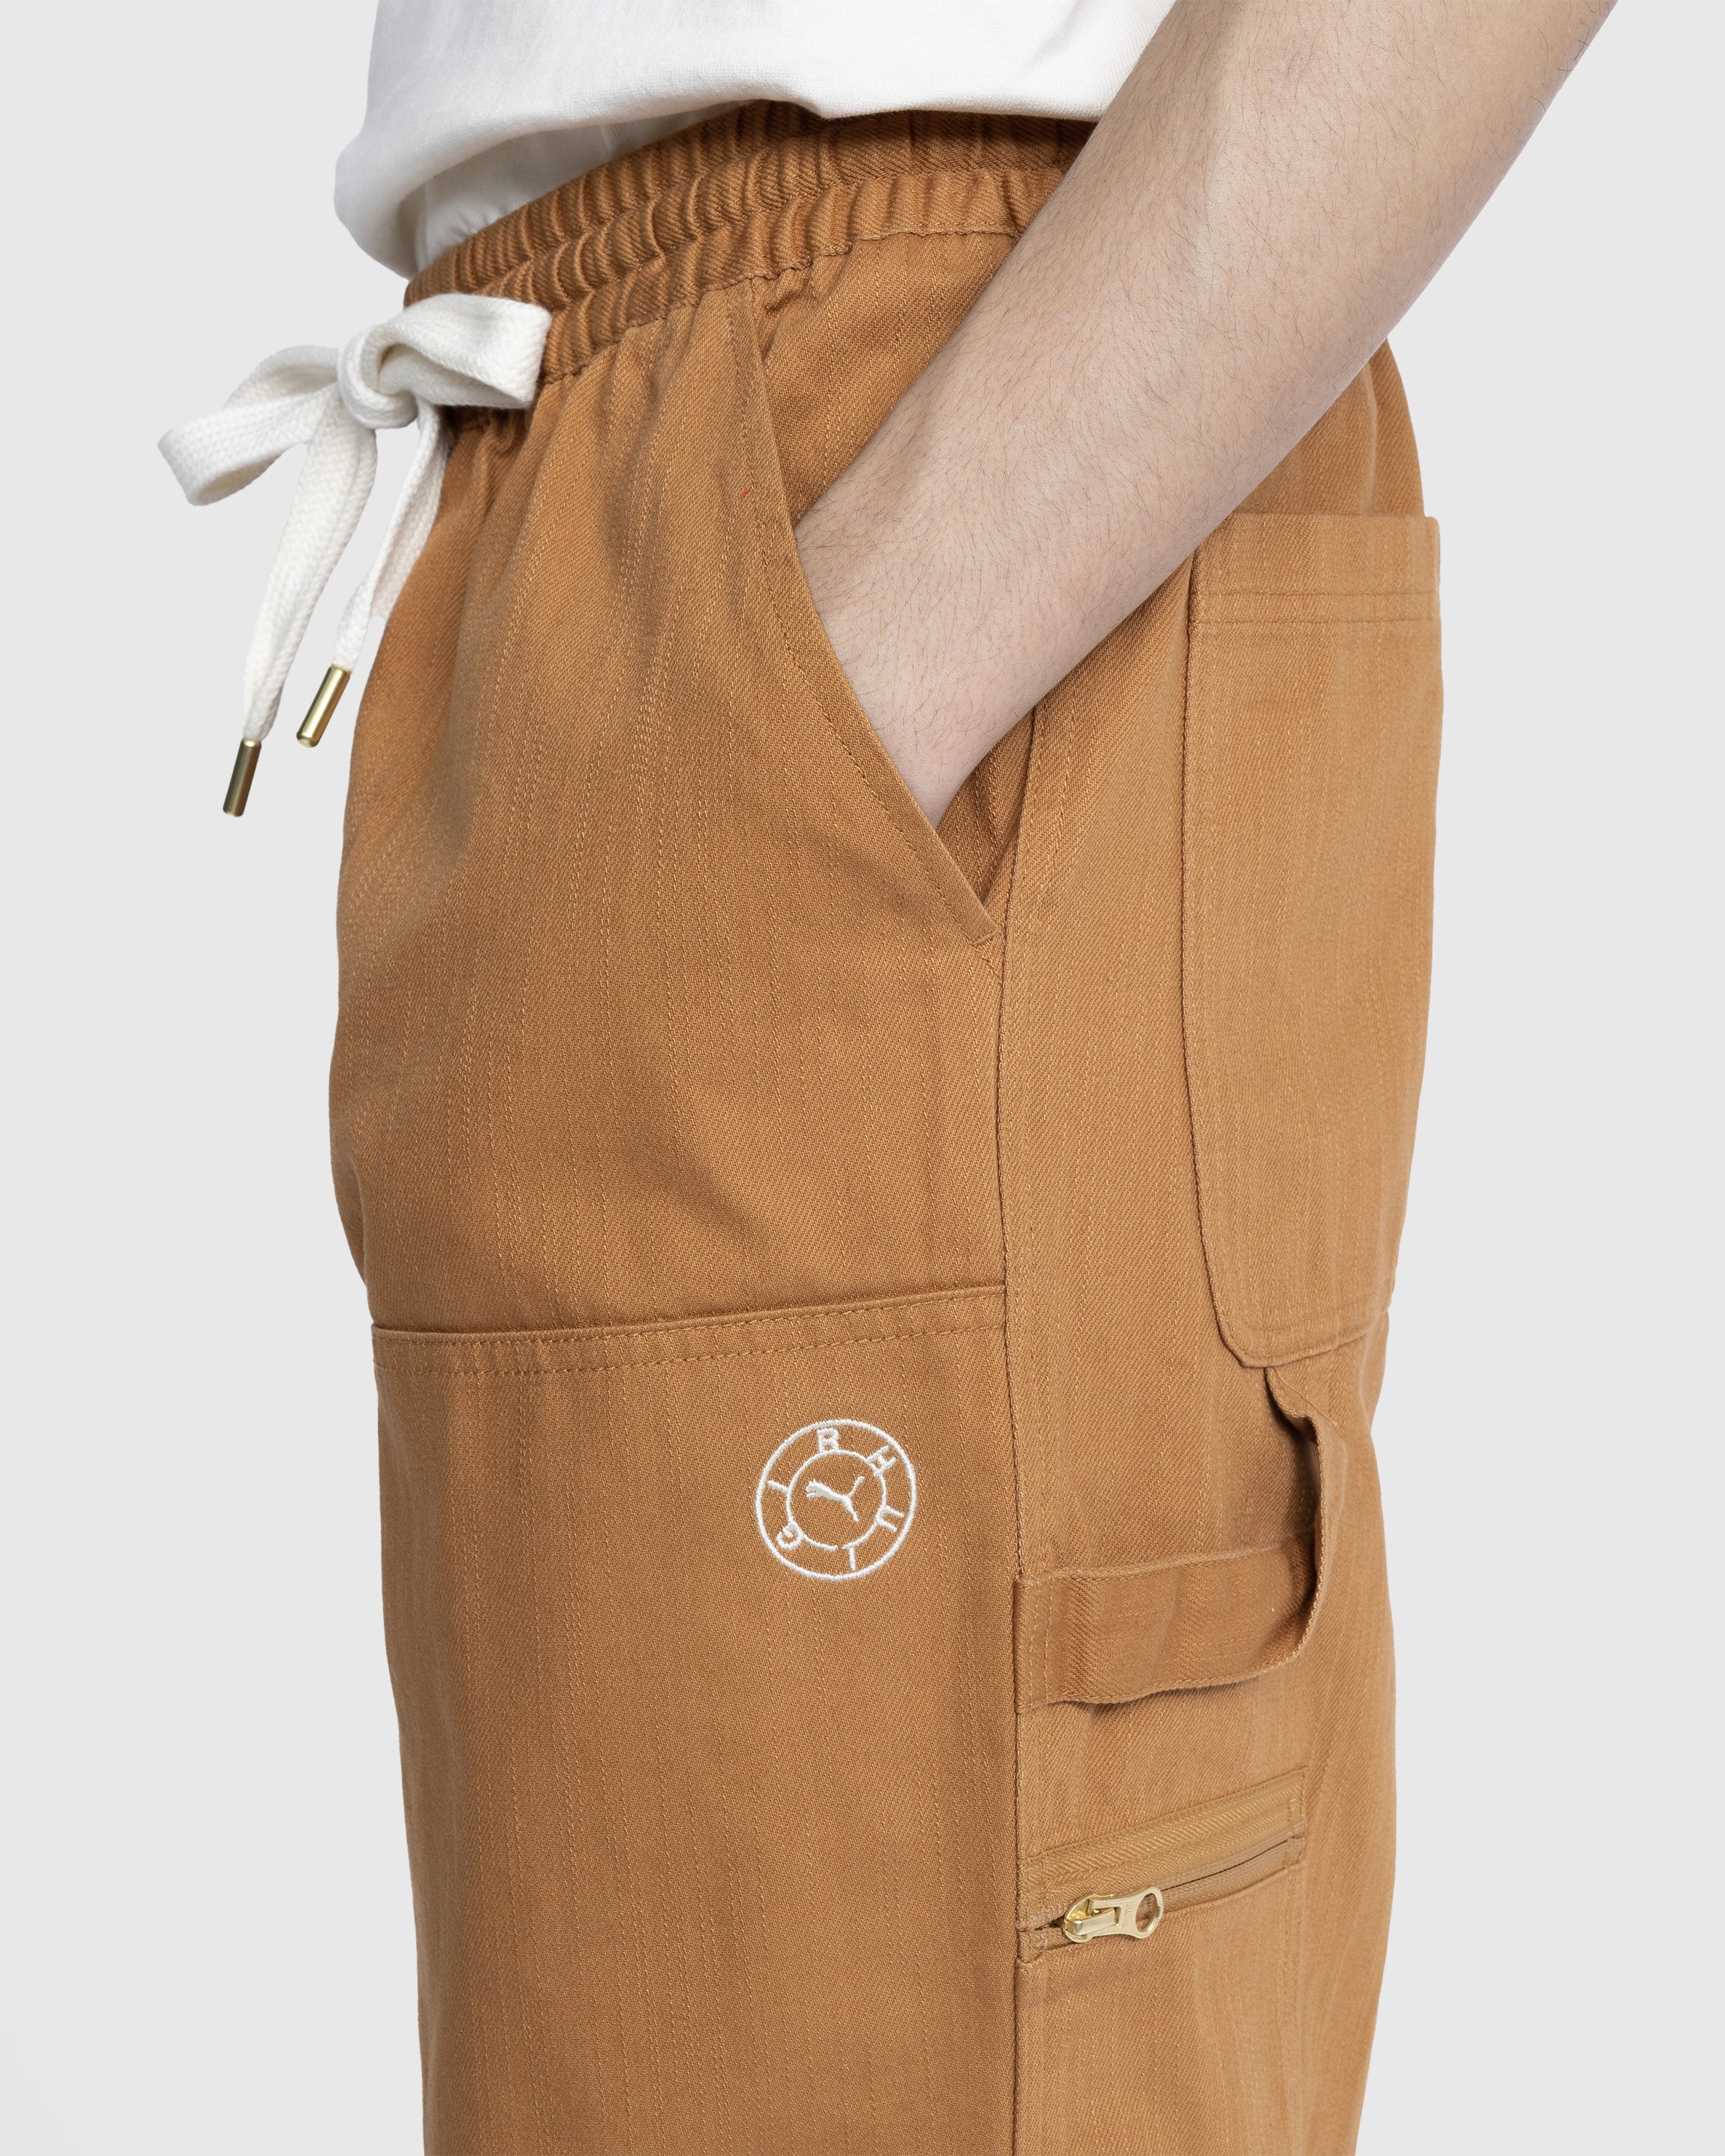 Puma x Rhuigi - Double Knee Pants Desert Tan - Clothing - Brown - Image 5